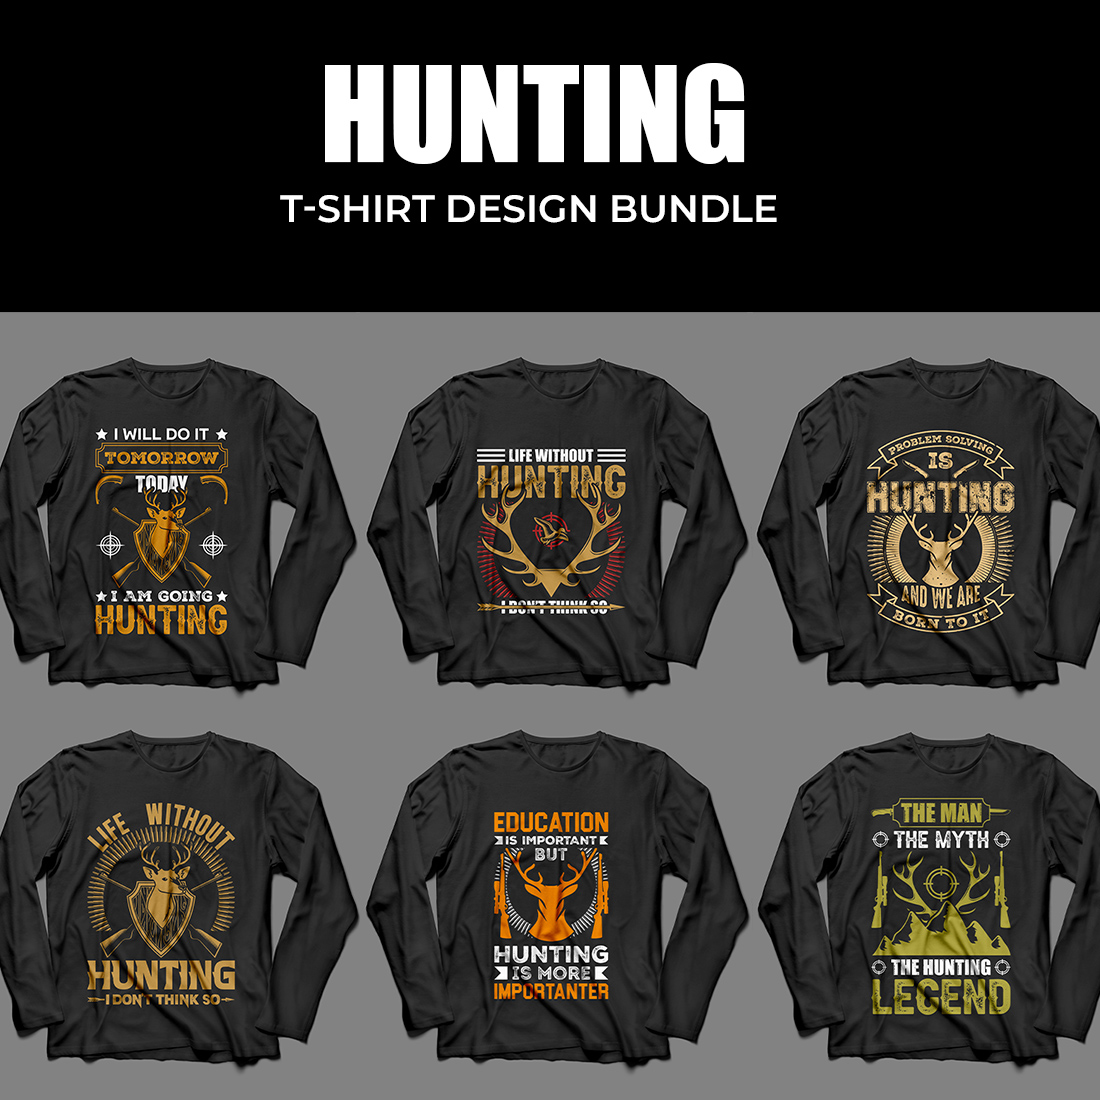 6 hunting t-shirt design bundle preview image.